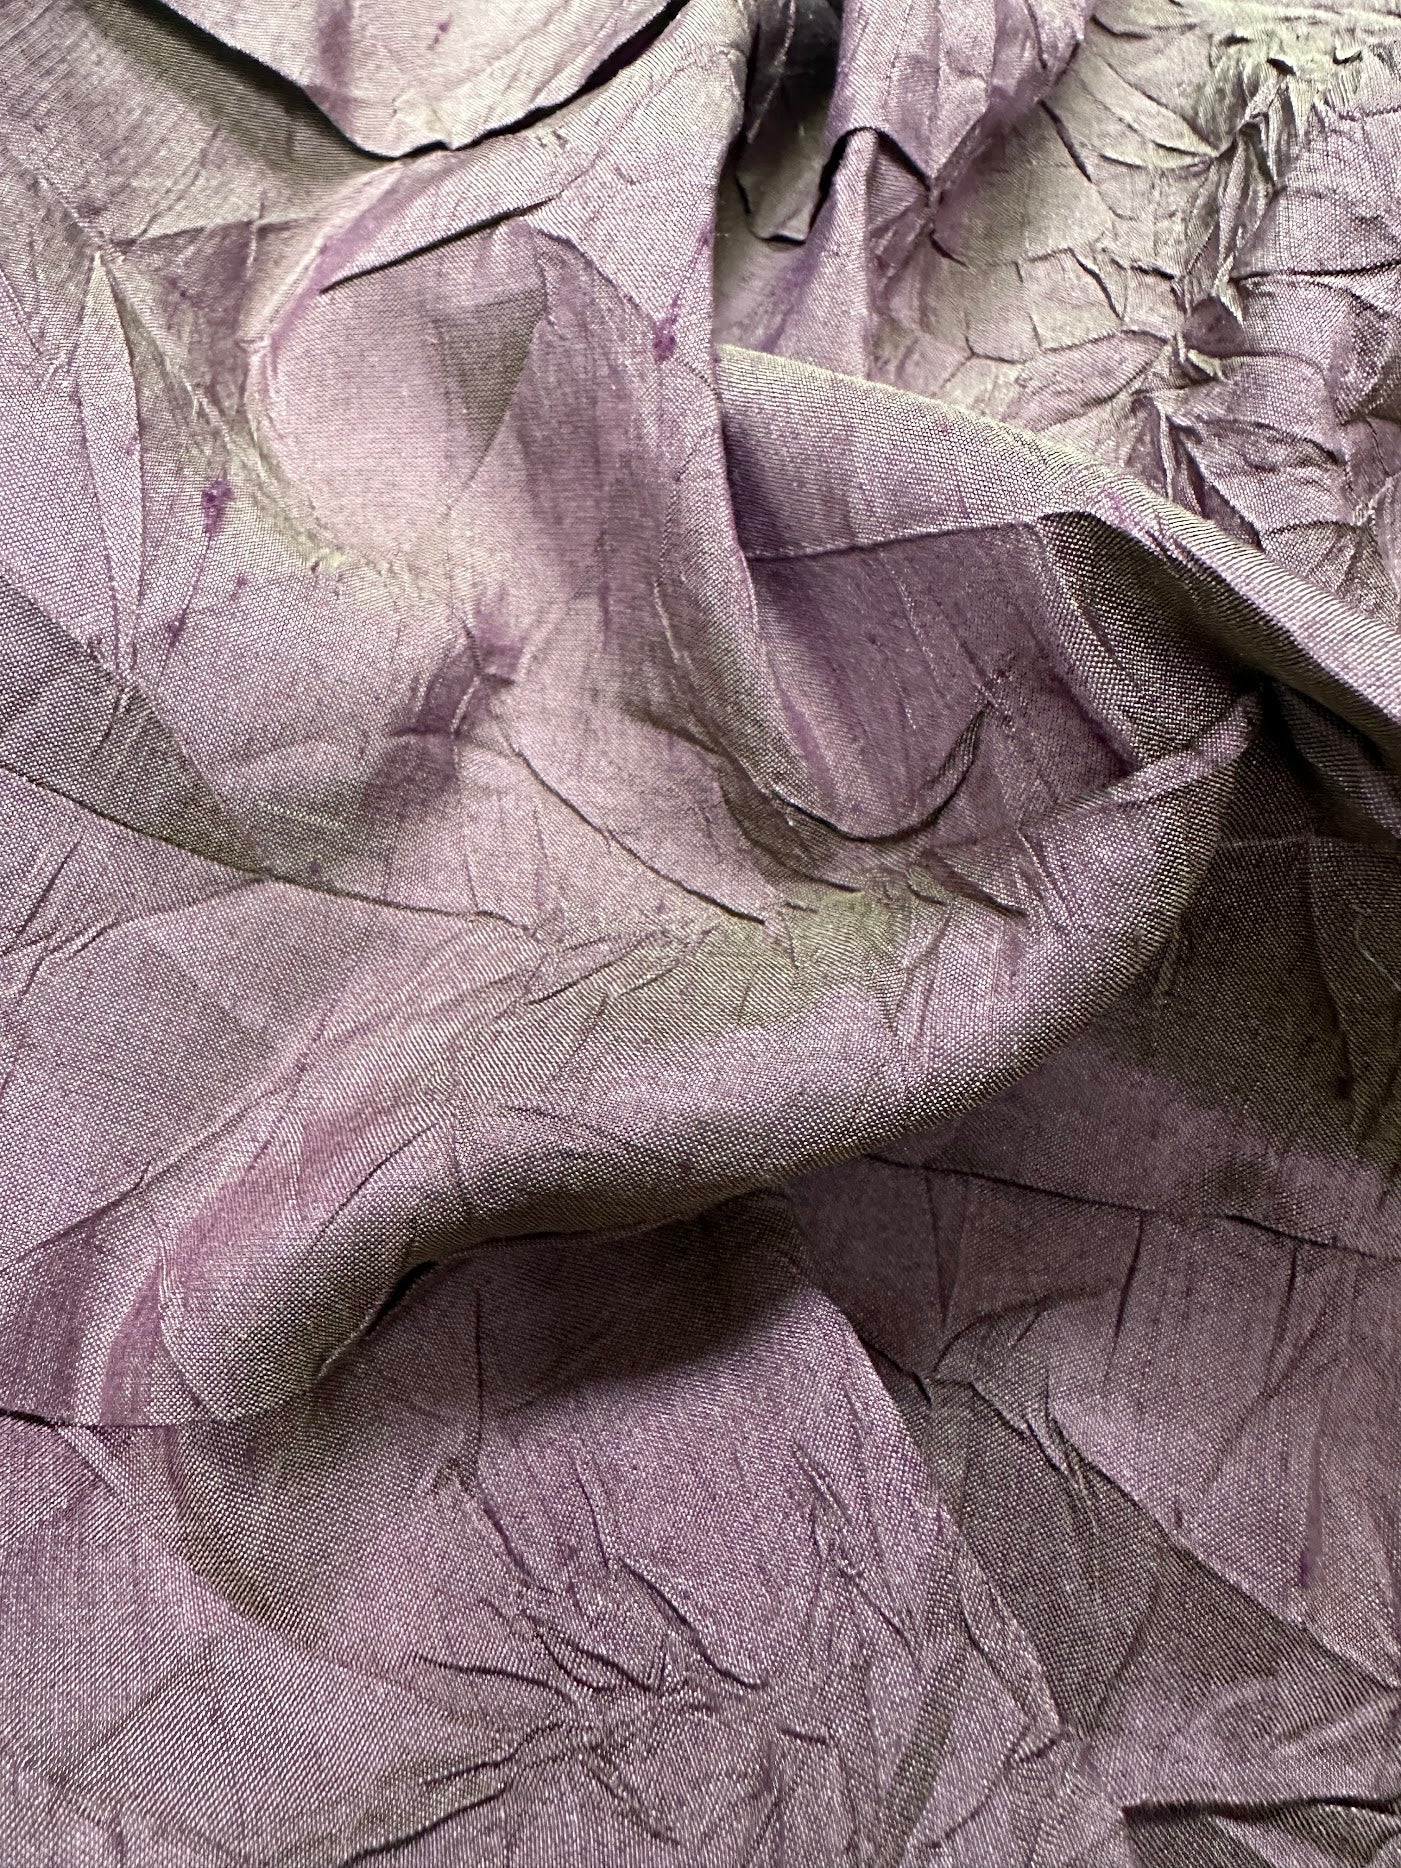 Crushed Silk Taffeta - Silk - Iridescent Purple Multi - Deadstock